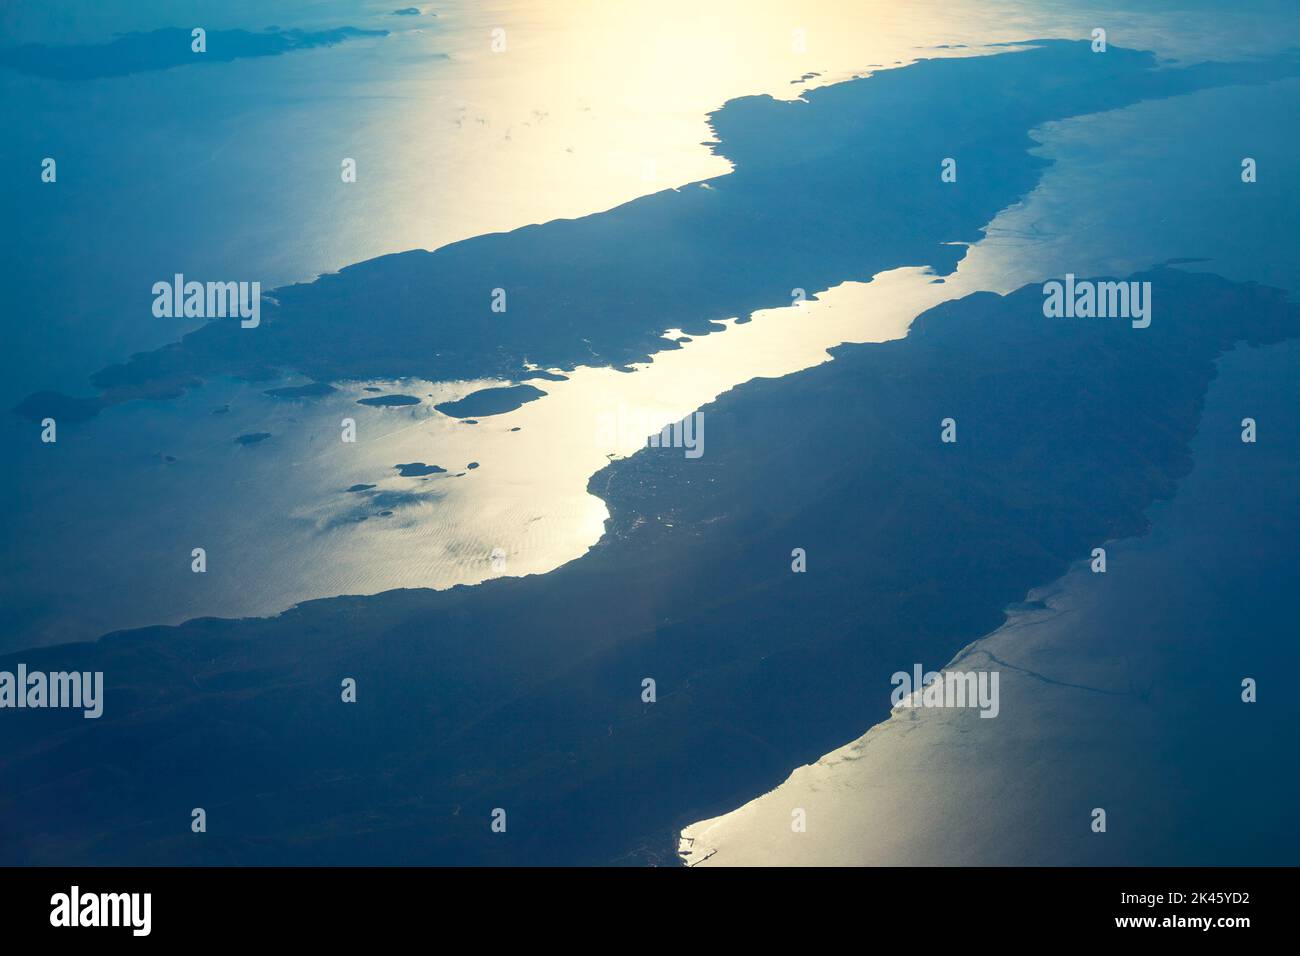 Korcula island and Adriatic Sea . Peljesac peninsula in southern Dalmatia . Aerial view of islands in the sea Stock Photo